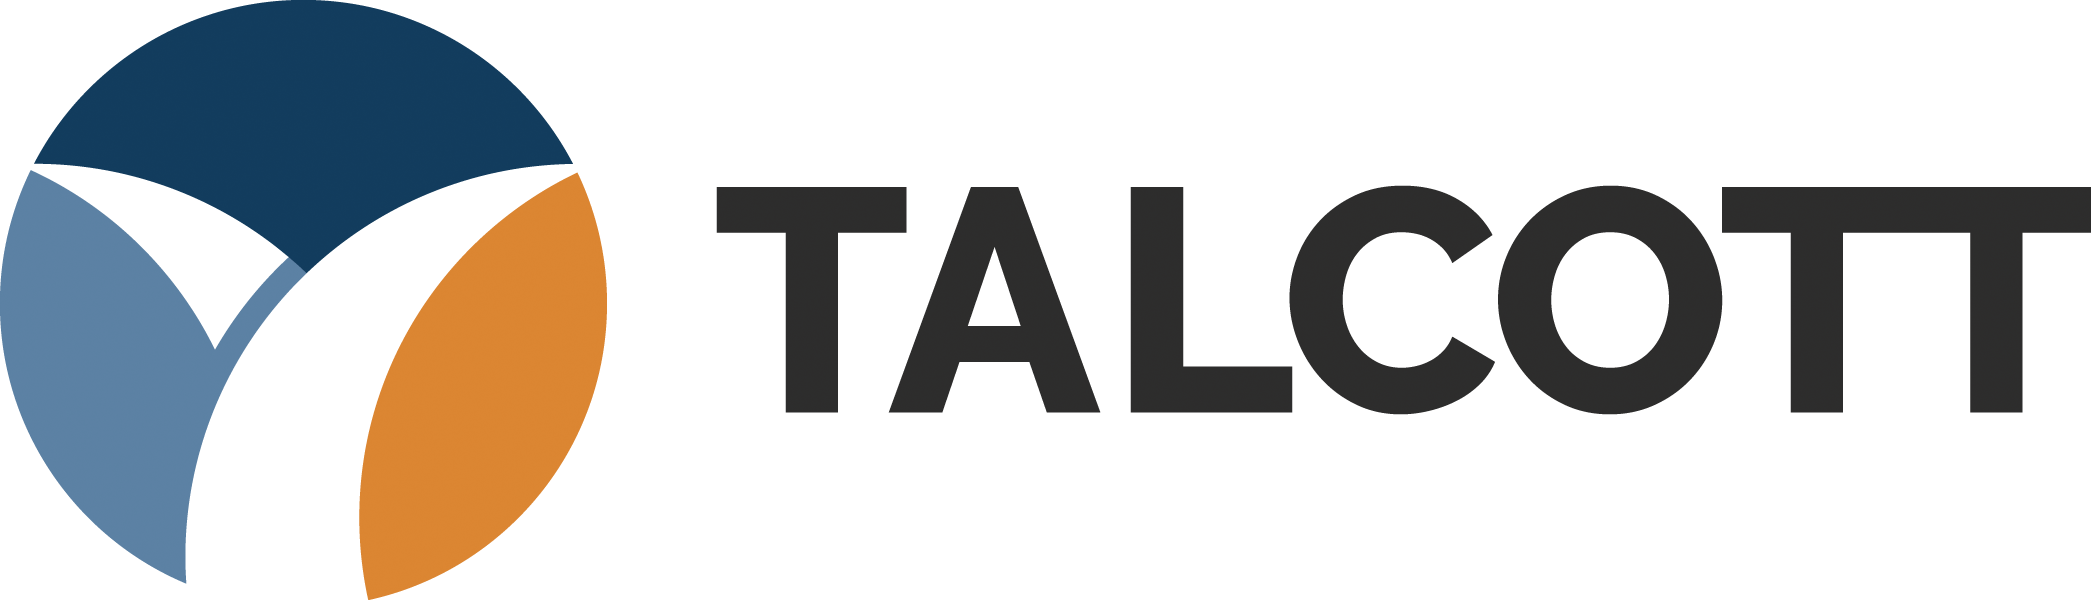 Talcott Logo